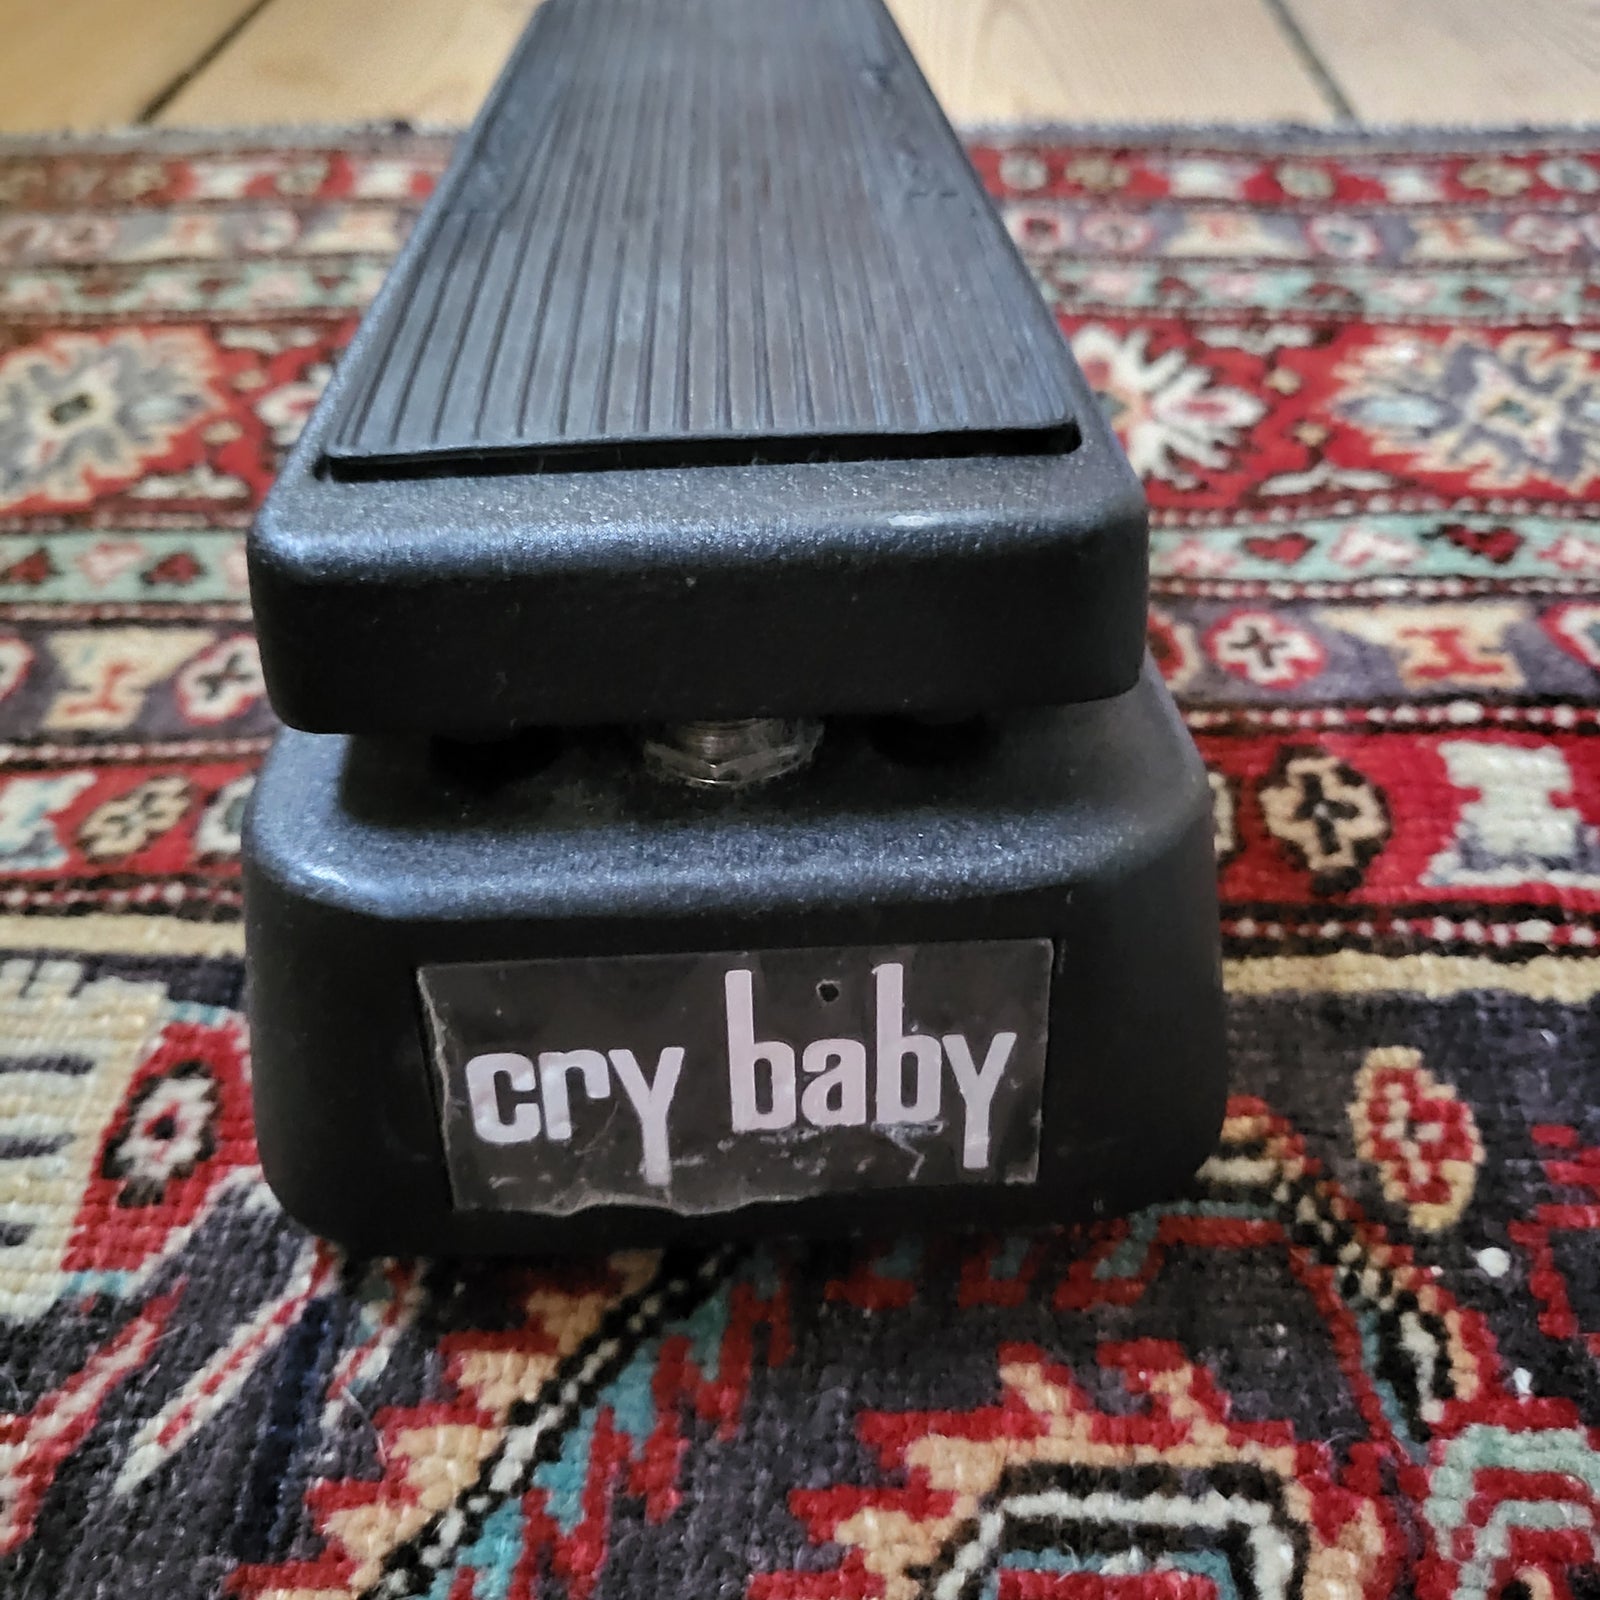 Wah, Jim Dunlop Cry Baby GCB95